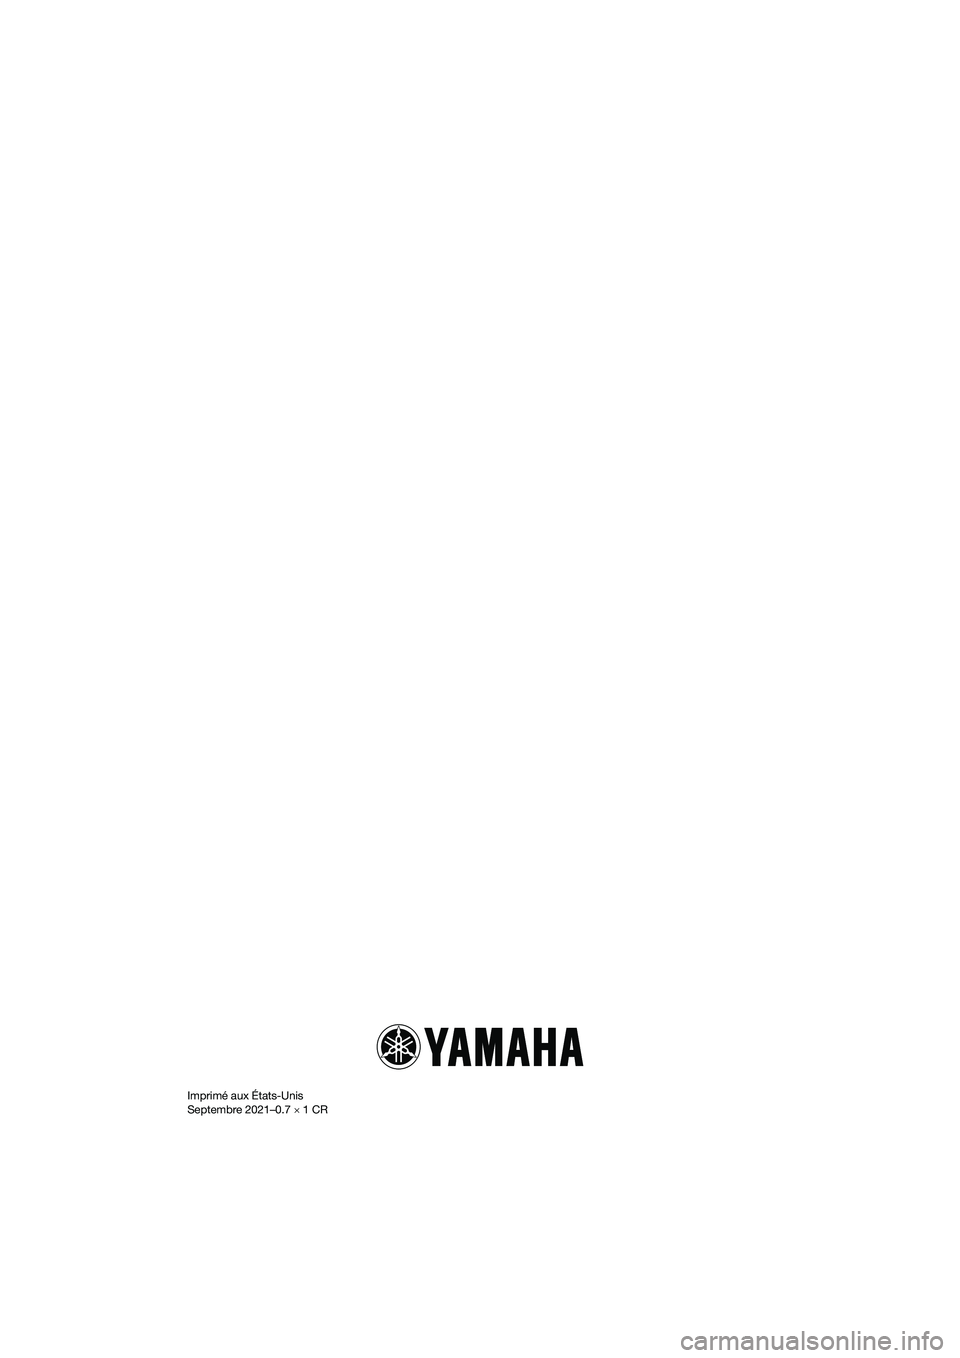 YAMAHA FX HO CRUISER 2022  Notices Demploi (in French) Imprimé aux États-Unis
Septembre 2021–0.7  1 CR
UF3V73F0.book  Page 1  Tuesday, September 28, 2021  10:53 AM 